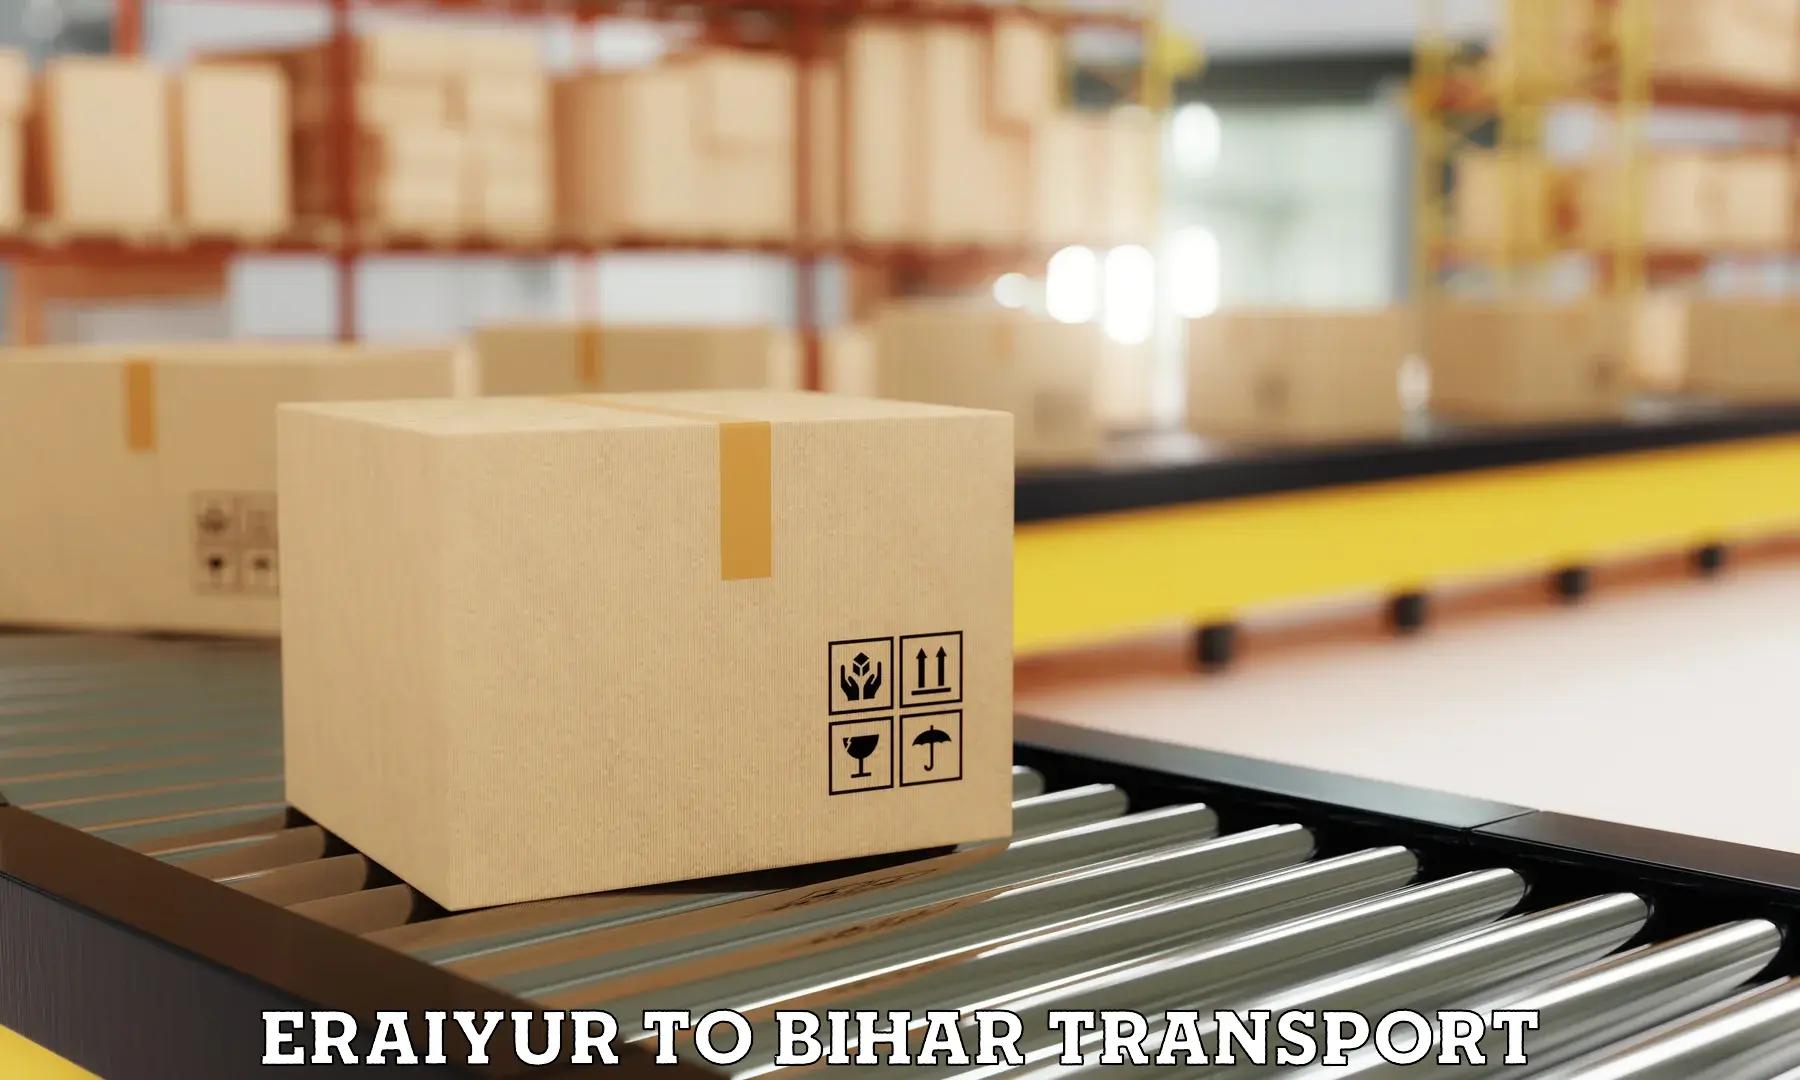 Delivery service Eraiyur to Minapur